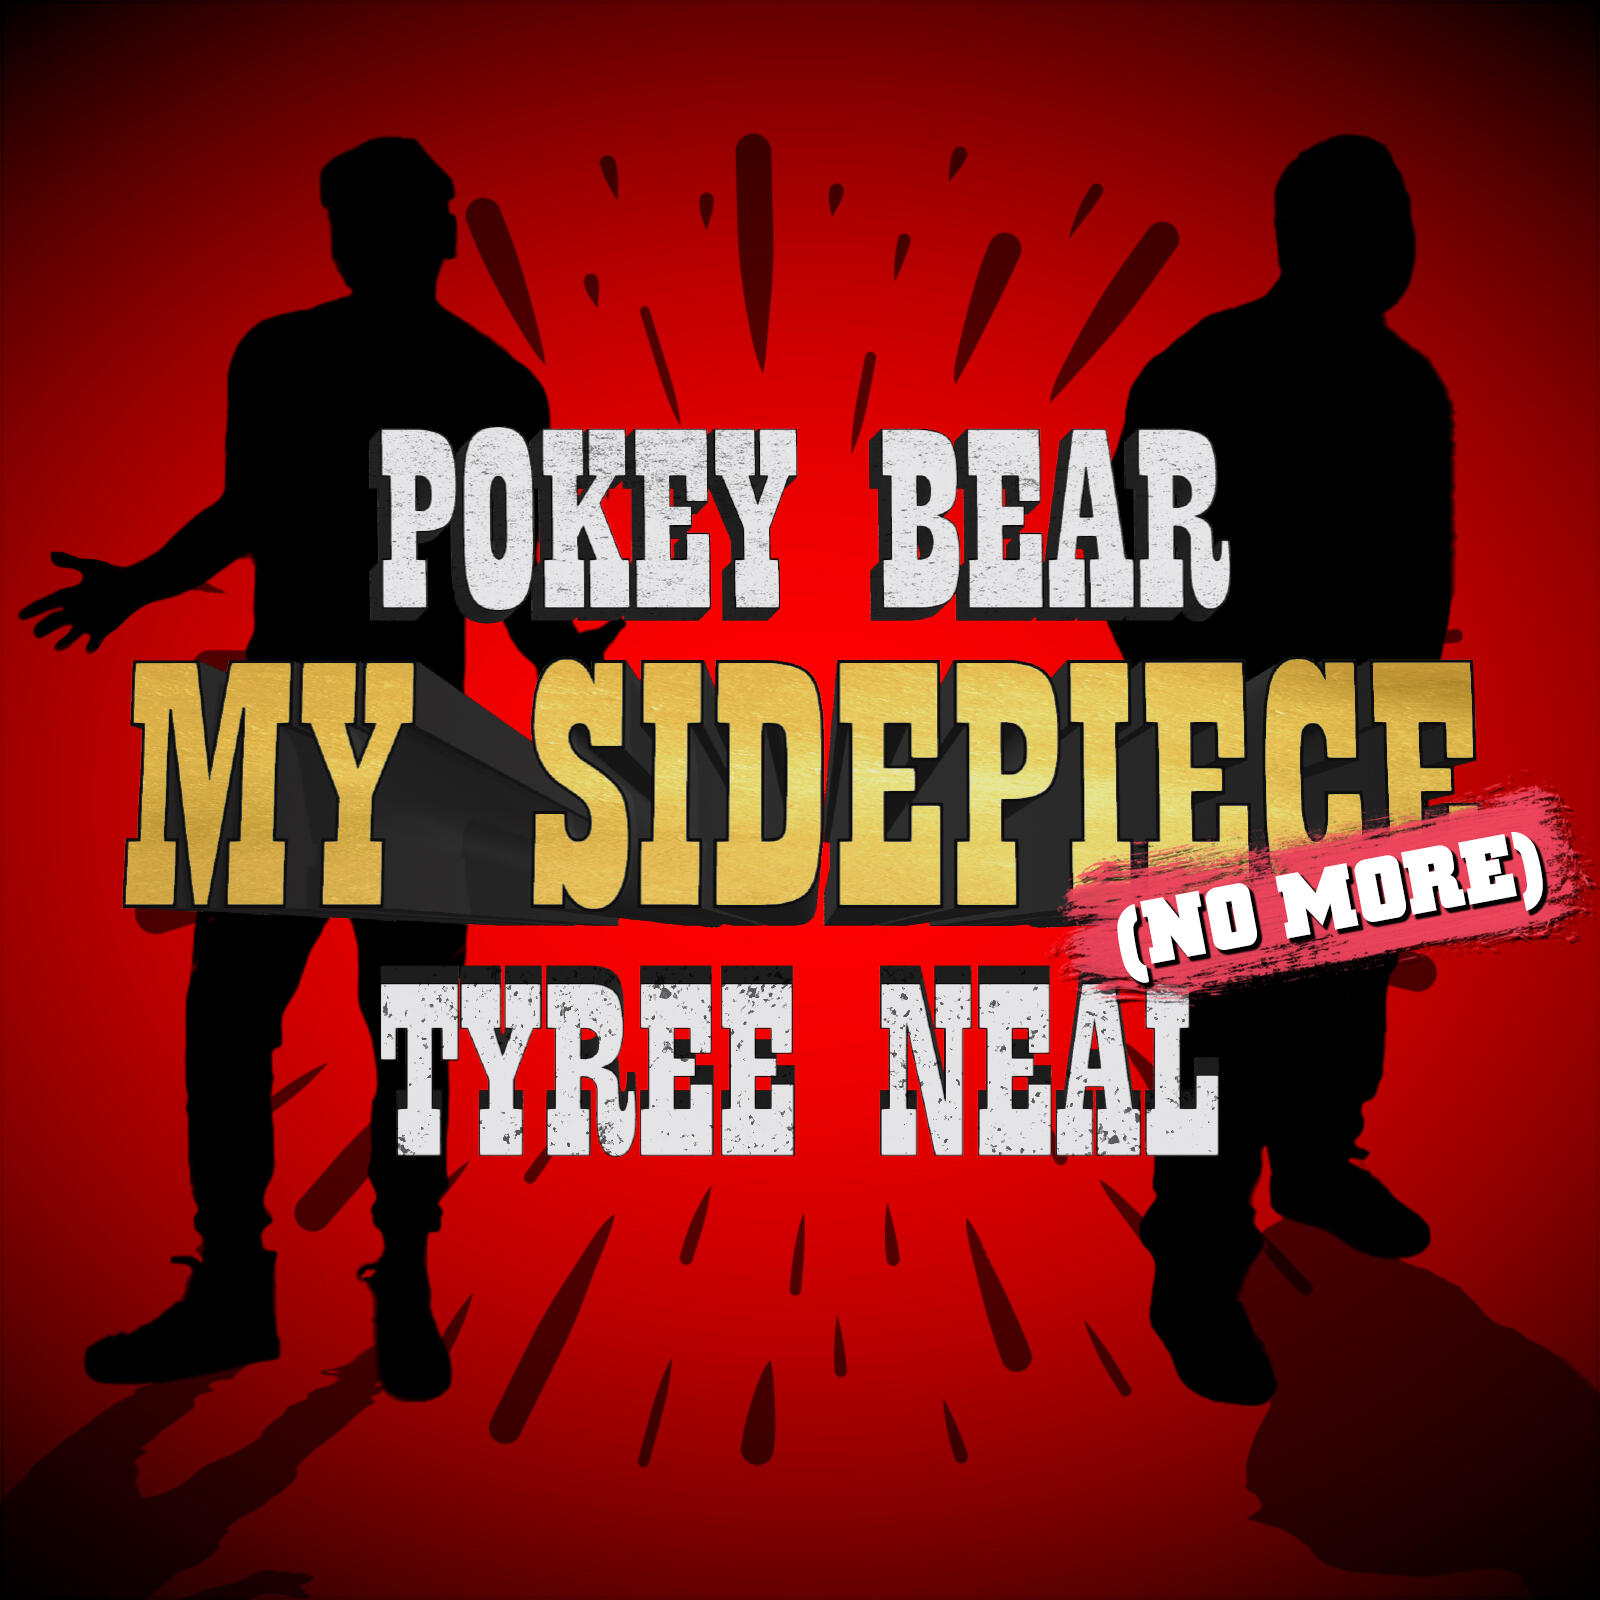 Who is pokey bear